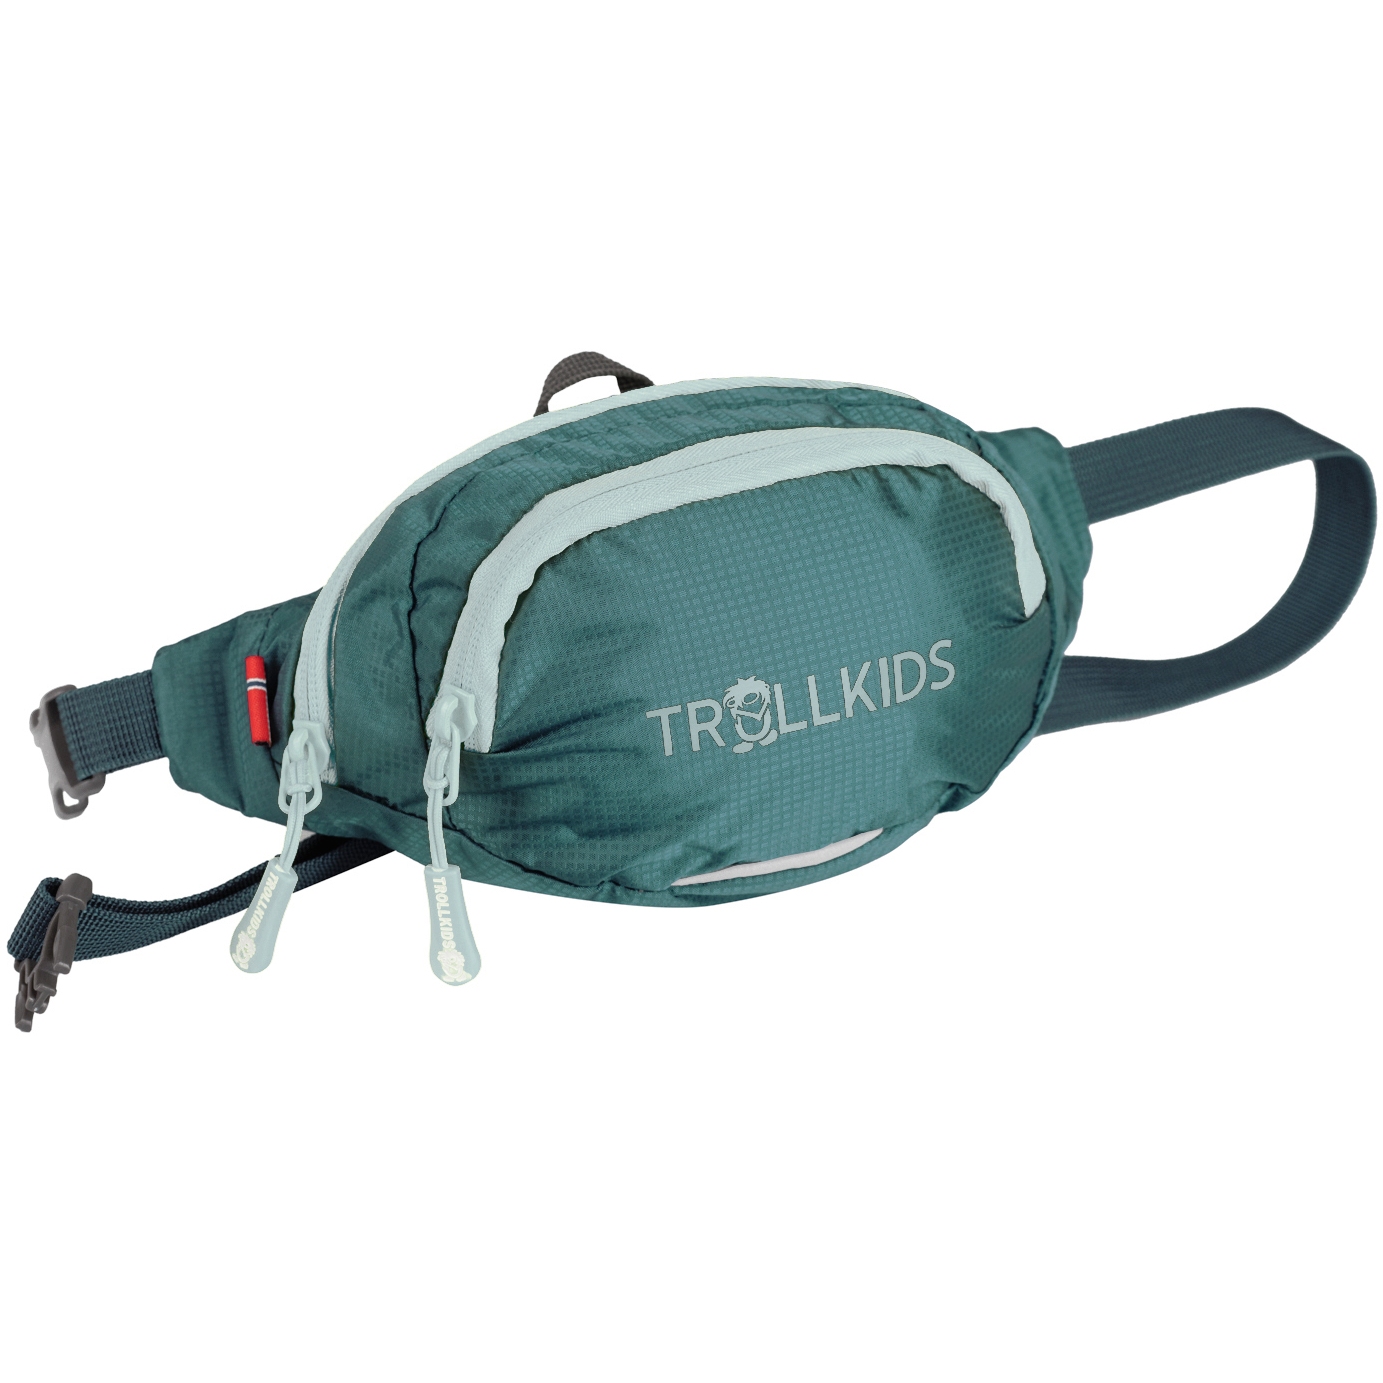 Productfoto van Trollkids Trolltunga Hip Bag 1.2L Kids - Teal/Aqua